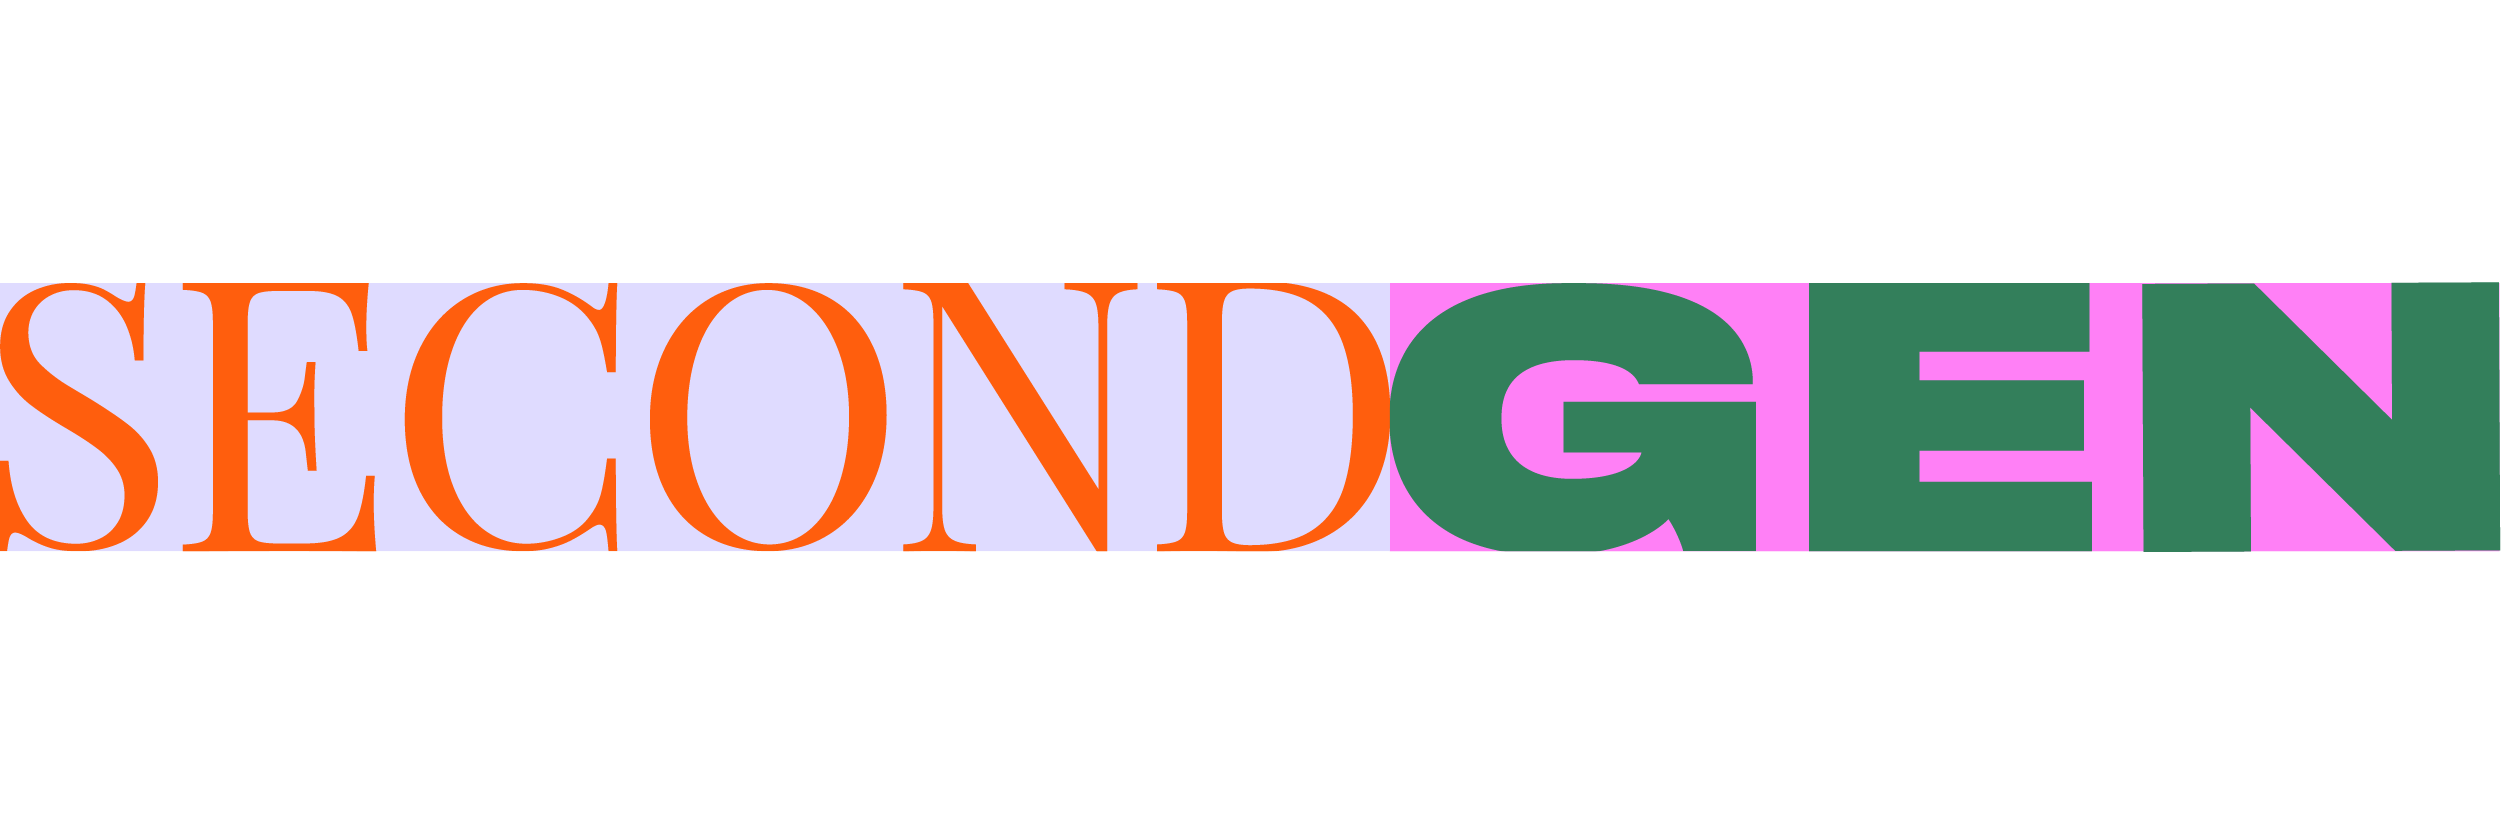 Second Gen logo